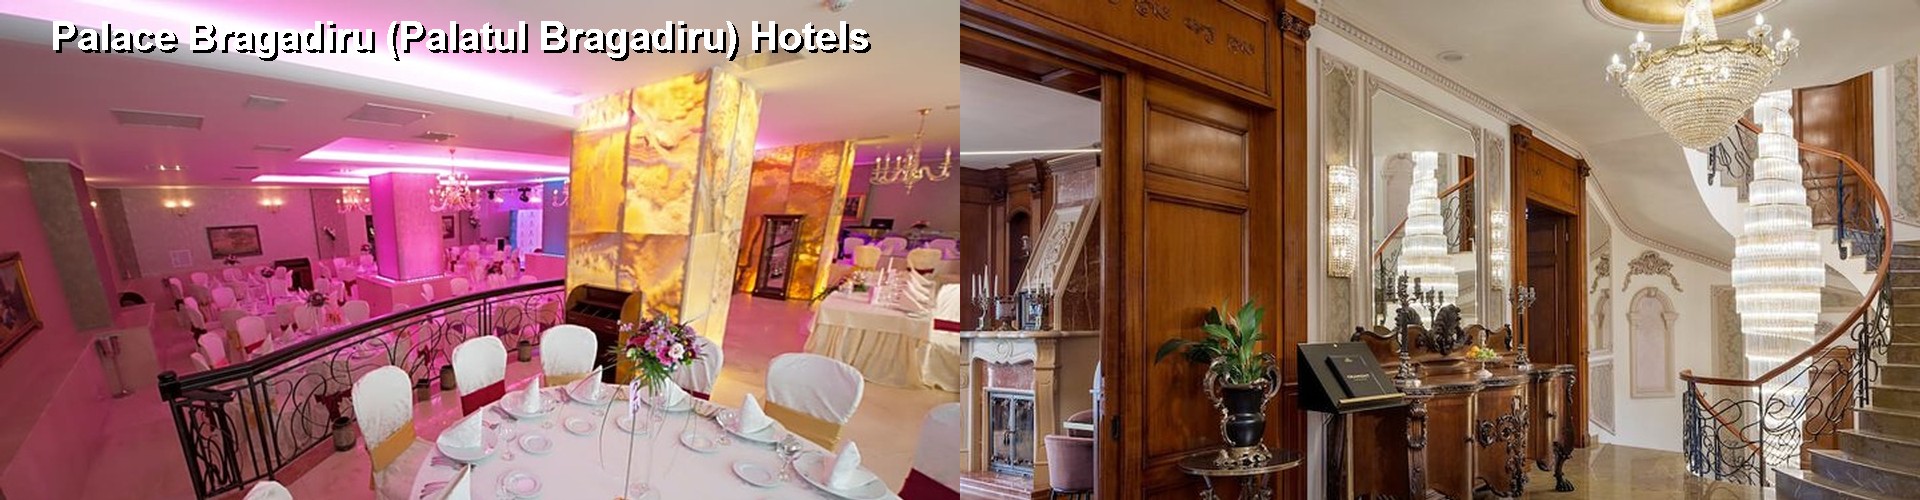 5 Best Hotels near Palace Bragadiru (Palatul Bragadiru)